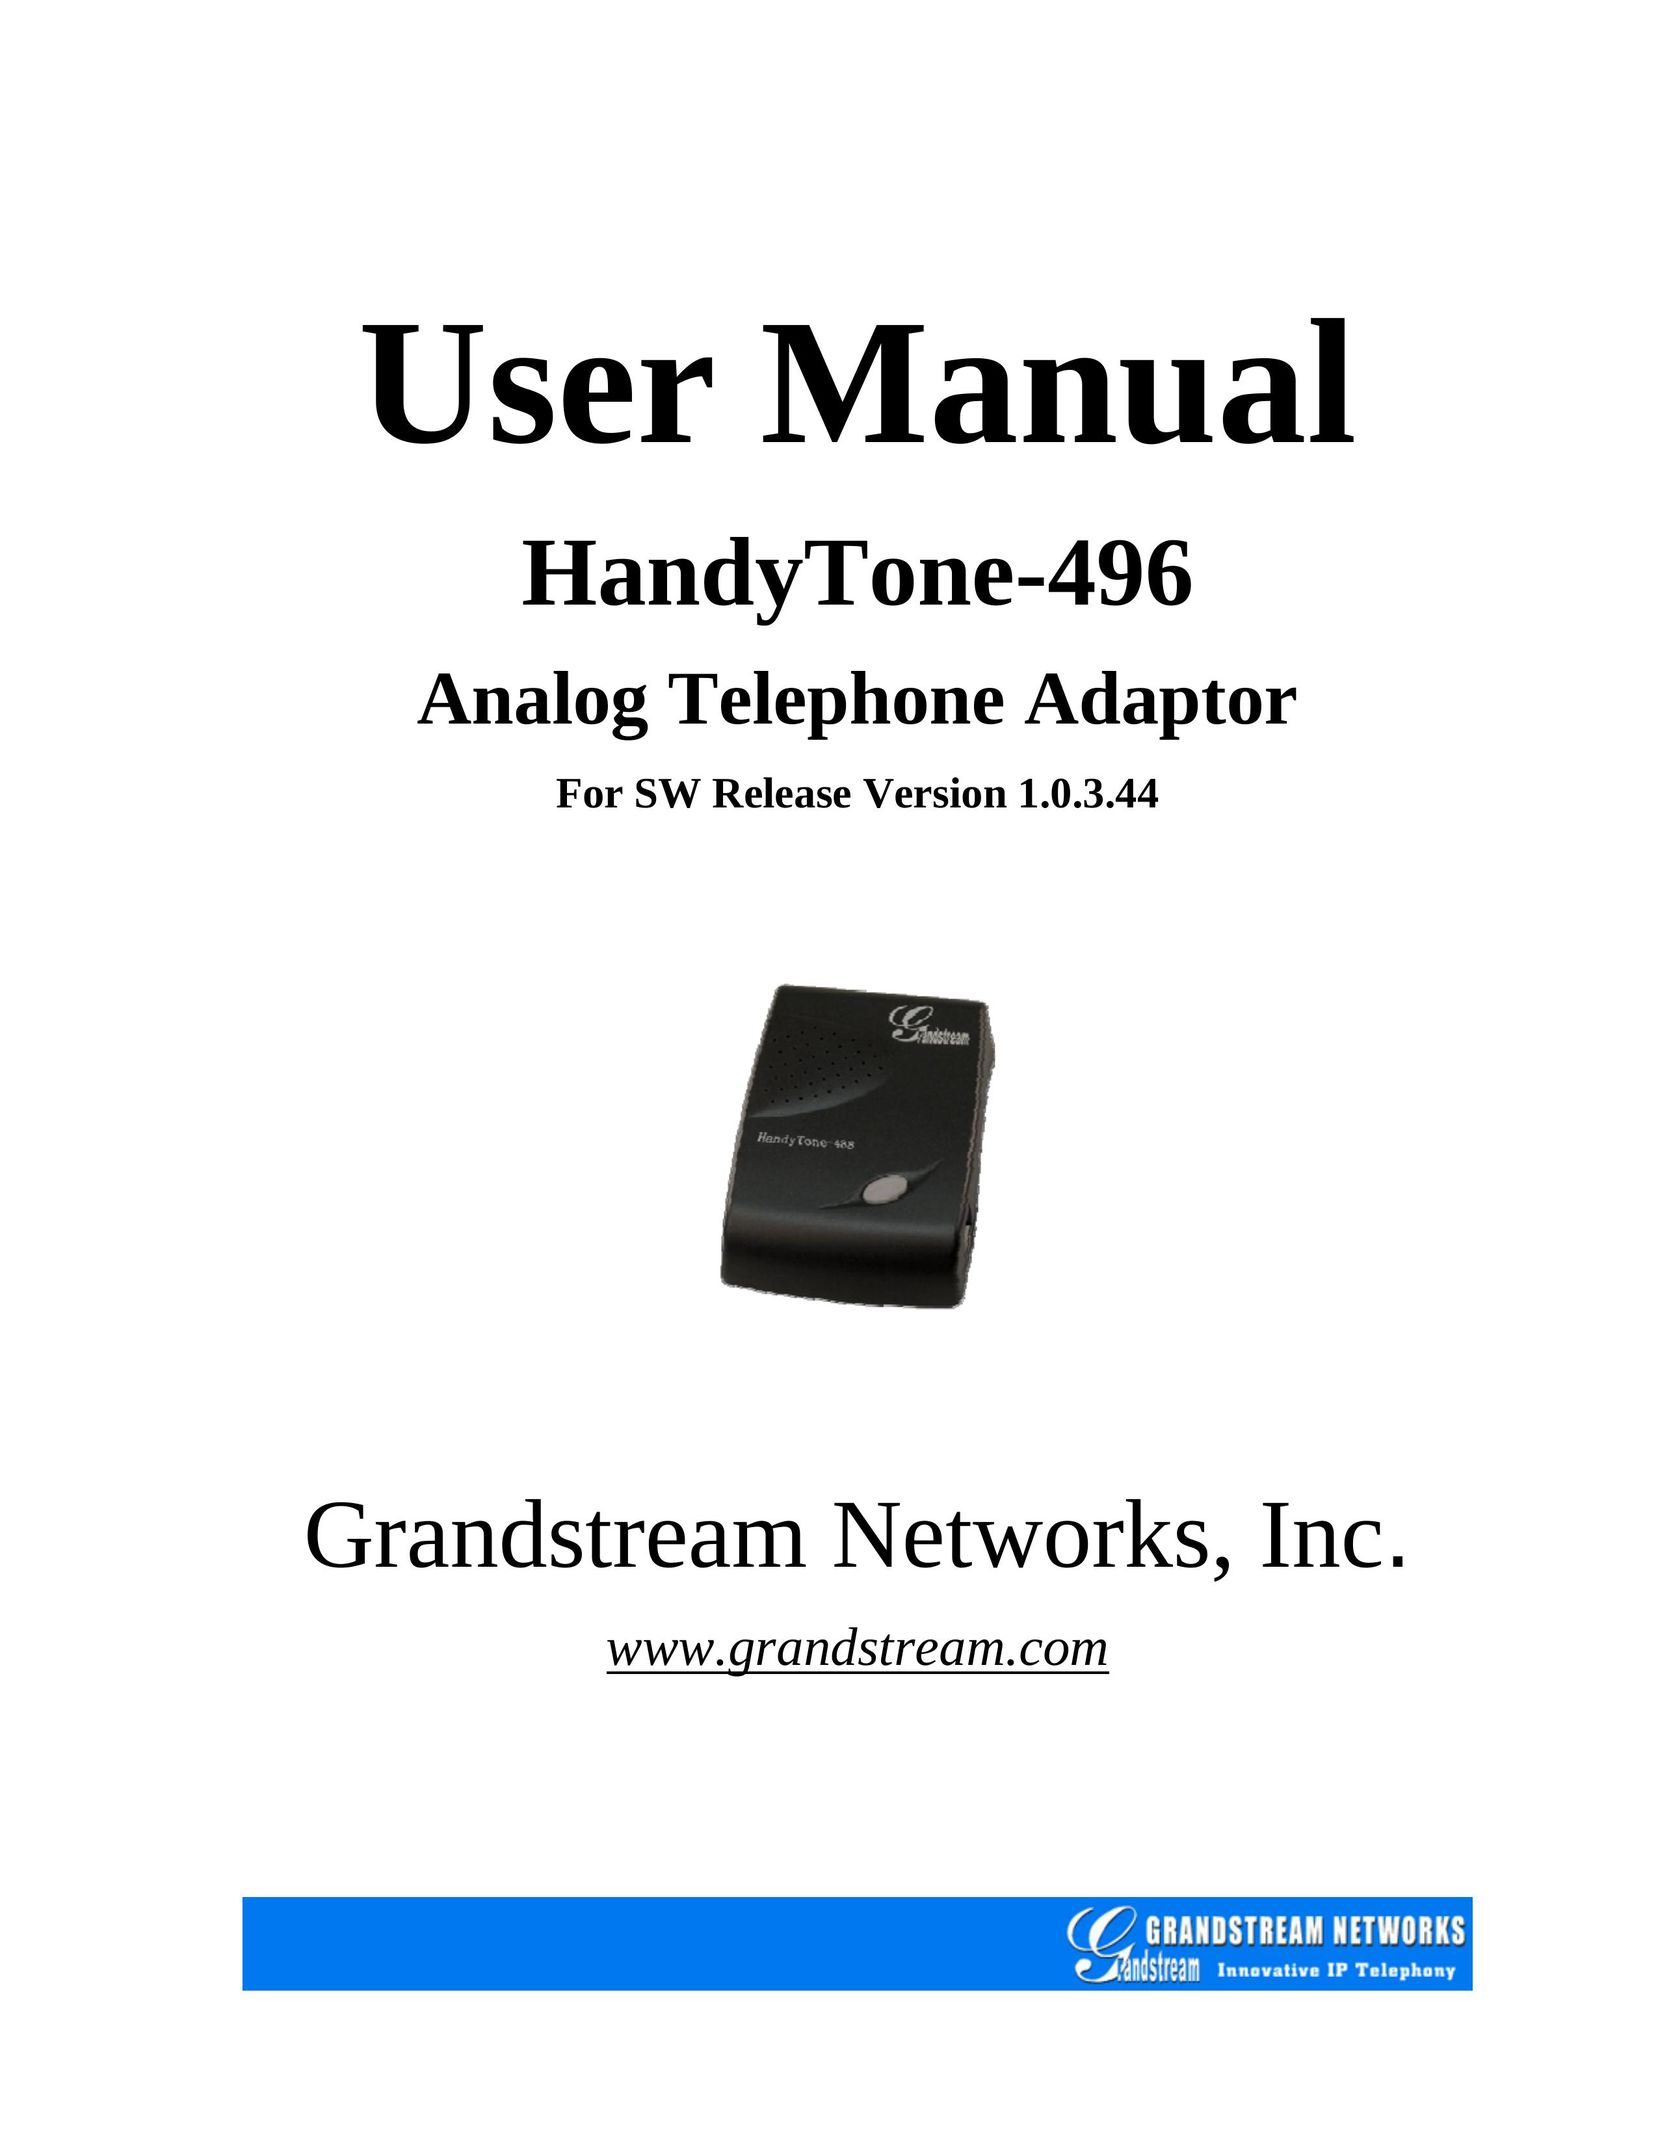 Grandstream Networks 496 Telephone User Manual